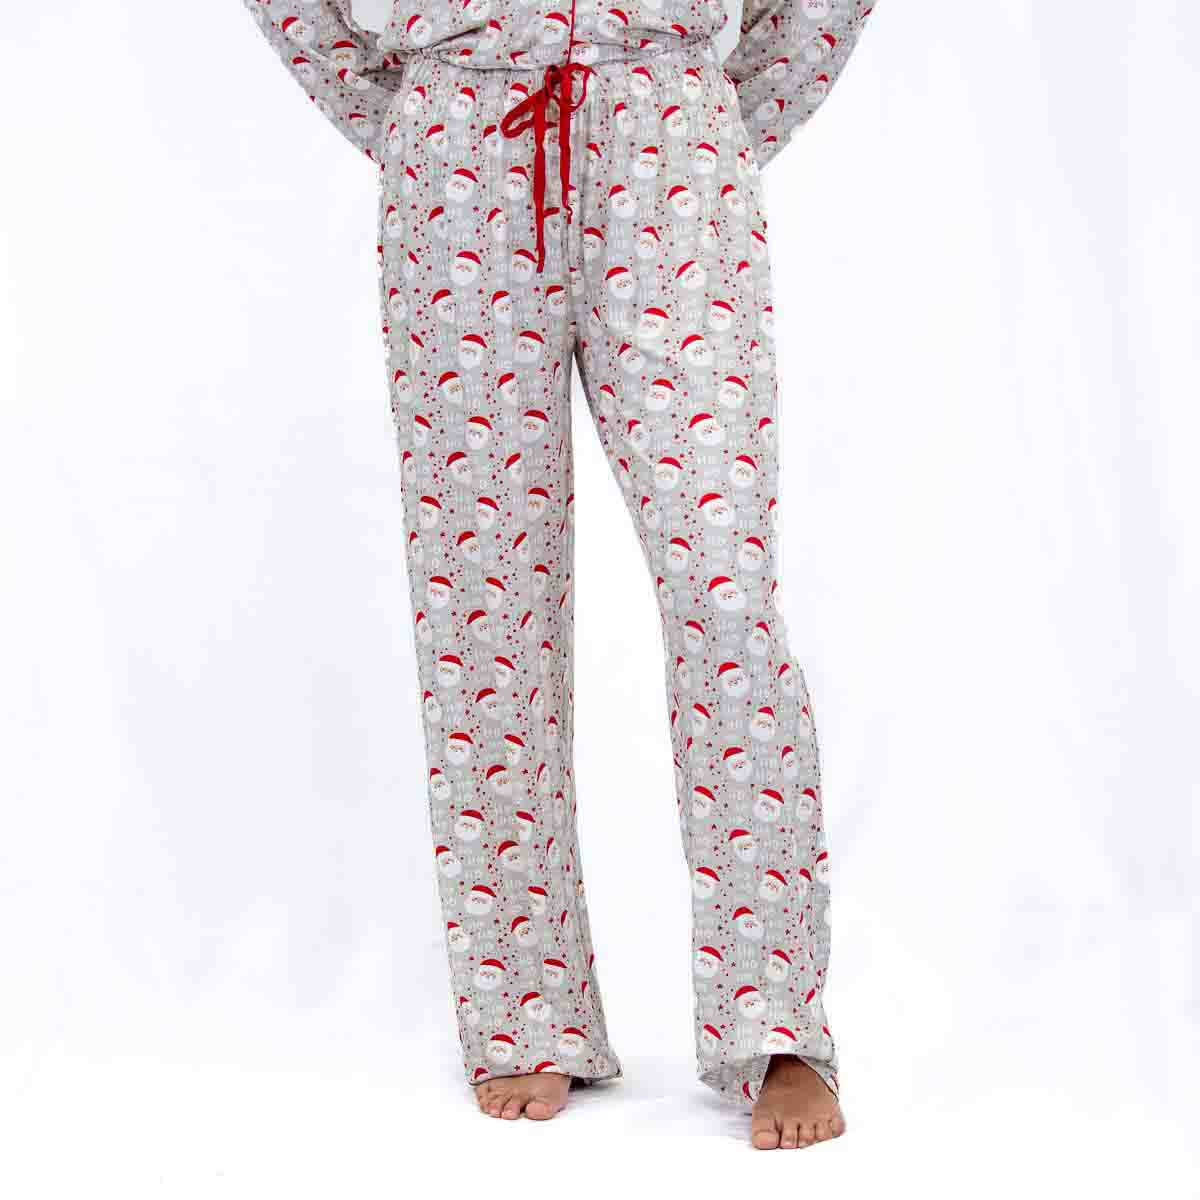 Cheerful Santa Sleep Pants Light Gray/True Red